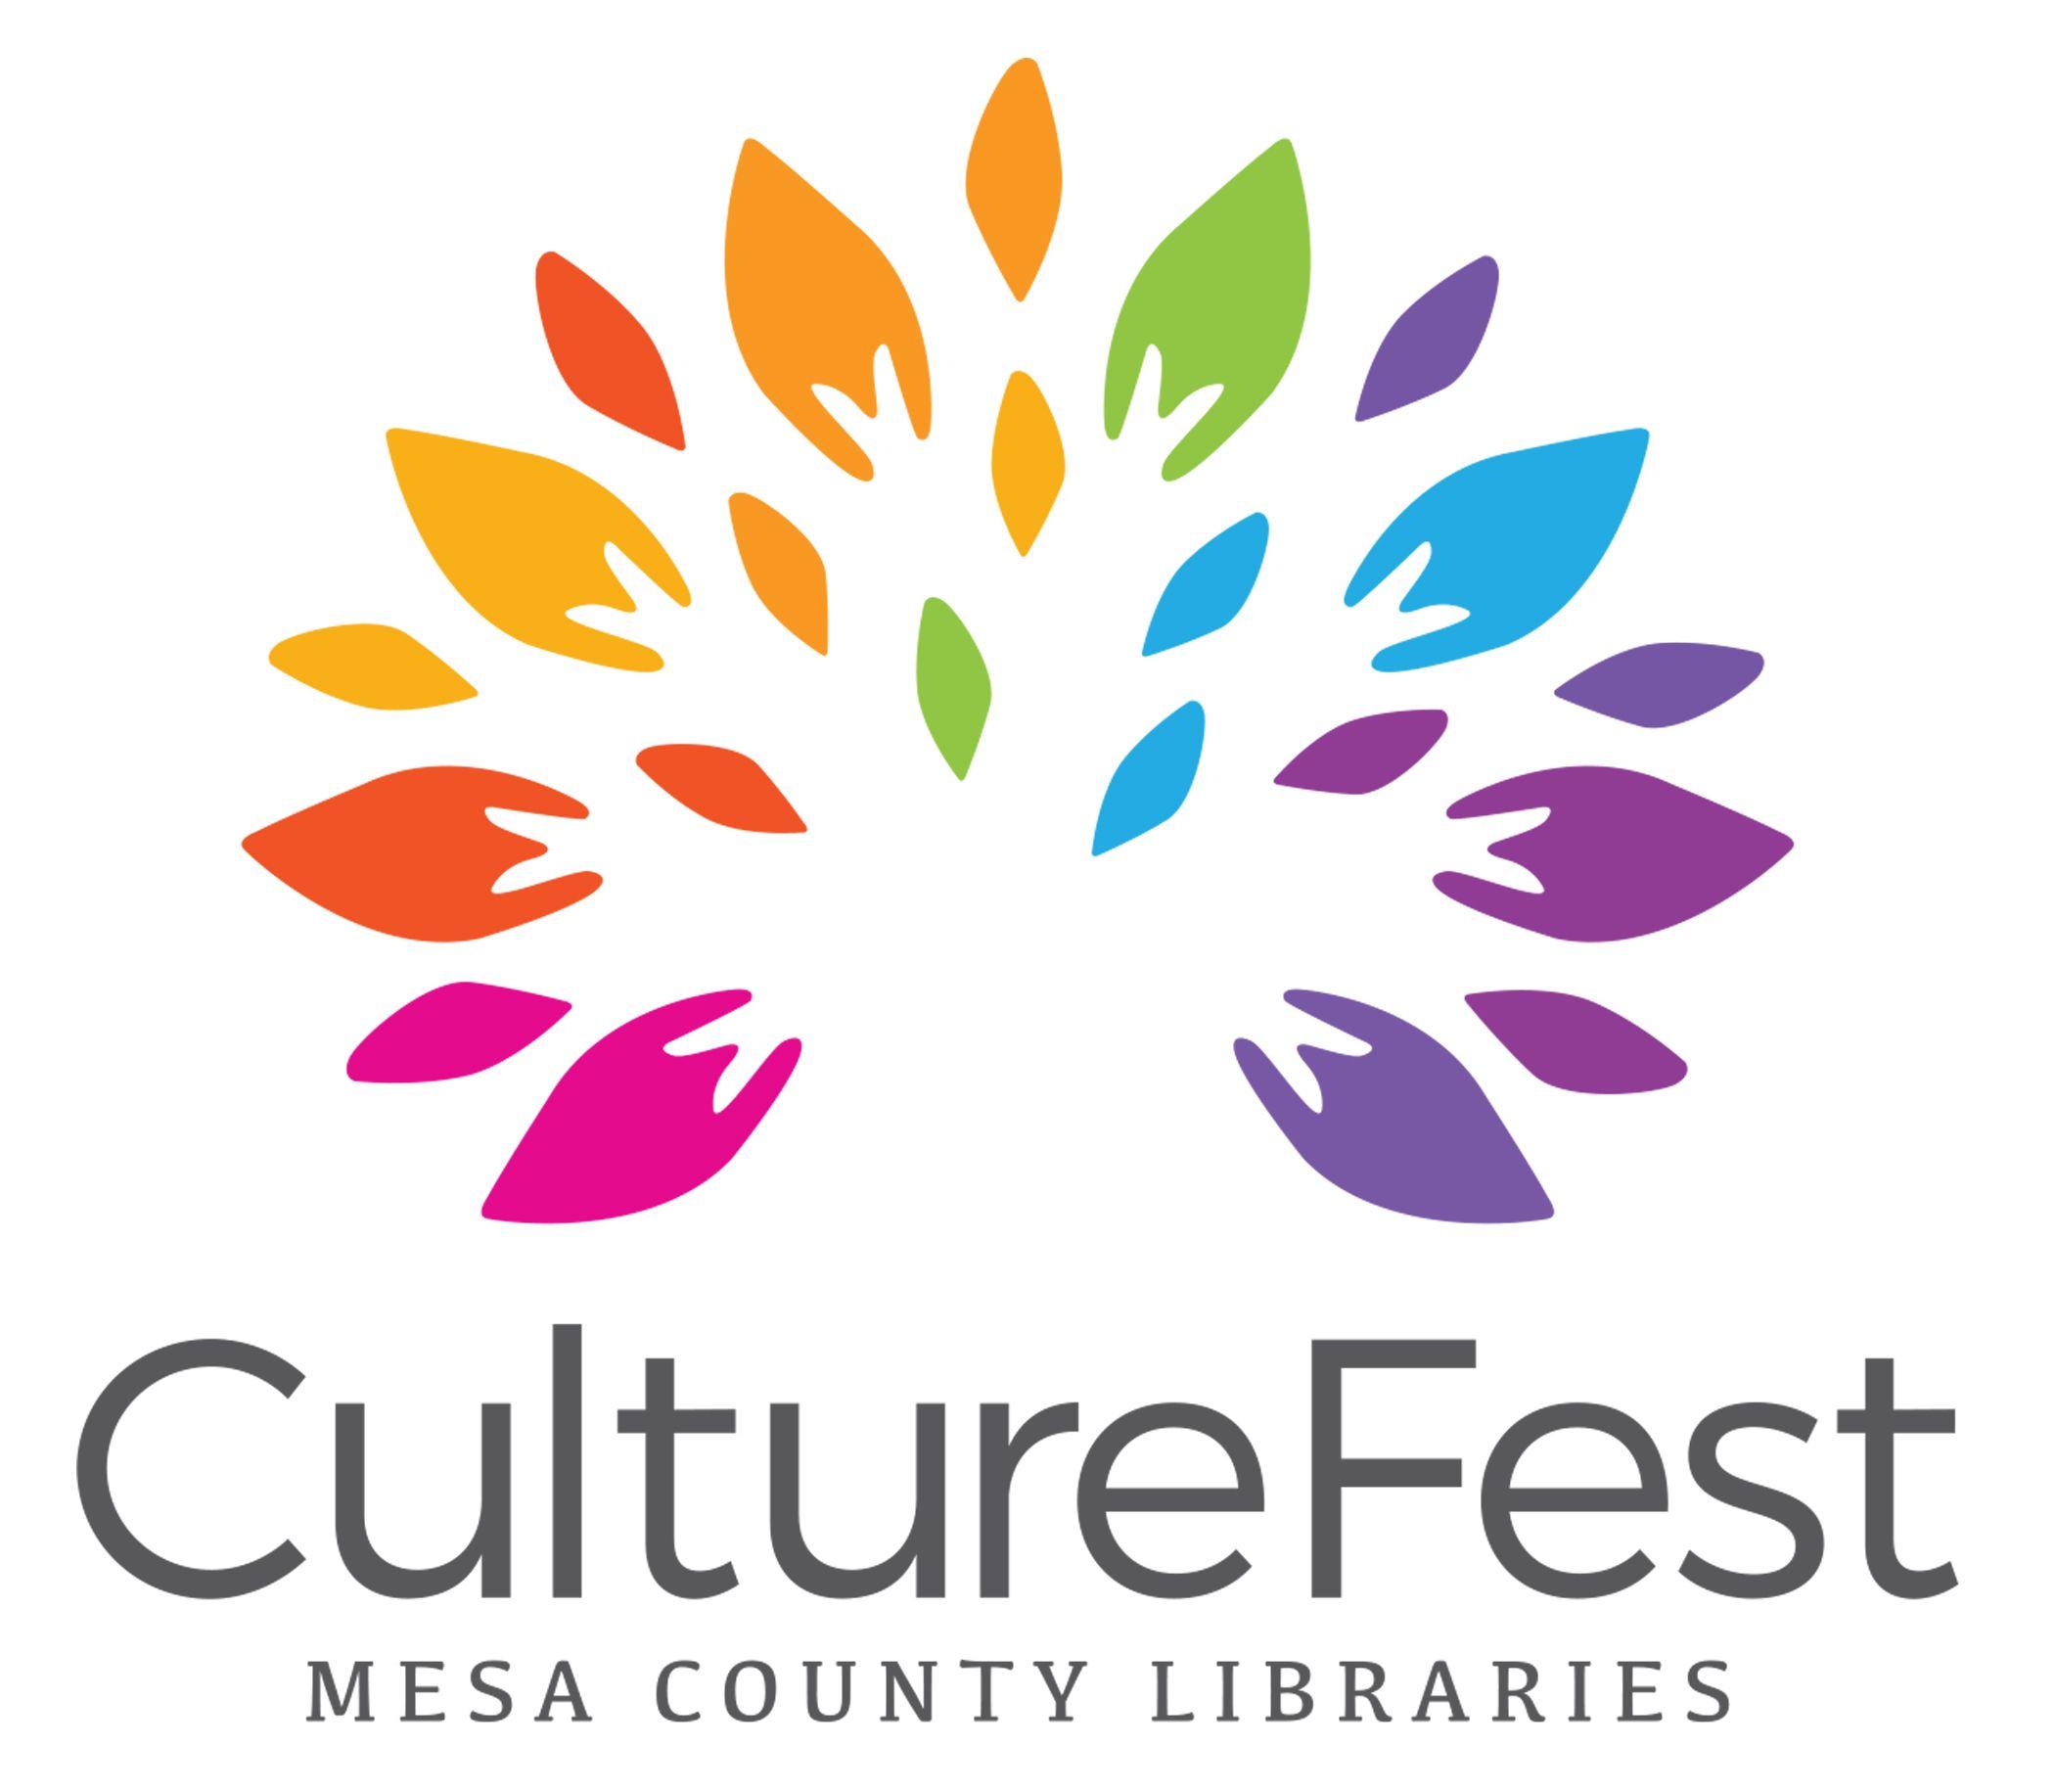 Culture Logo - Entries sought for 2016 Culture Fest art show at Mesa County